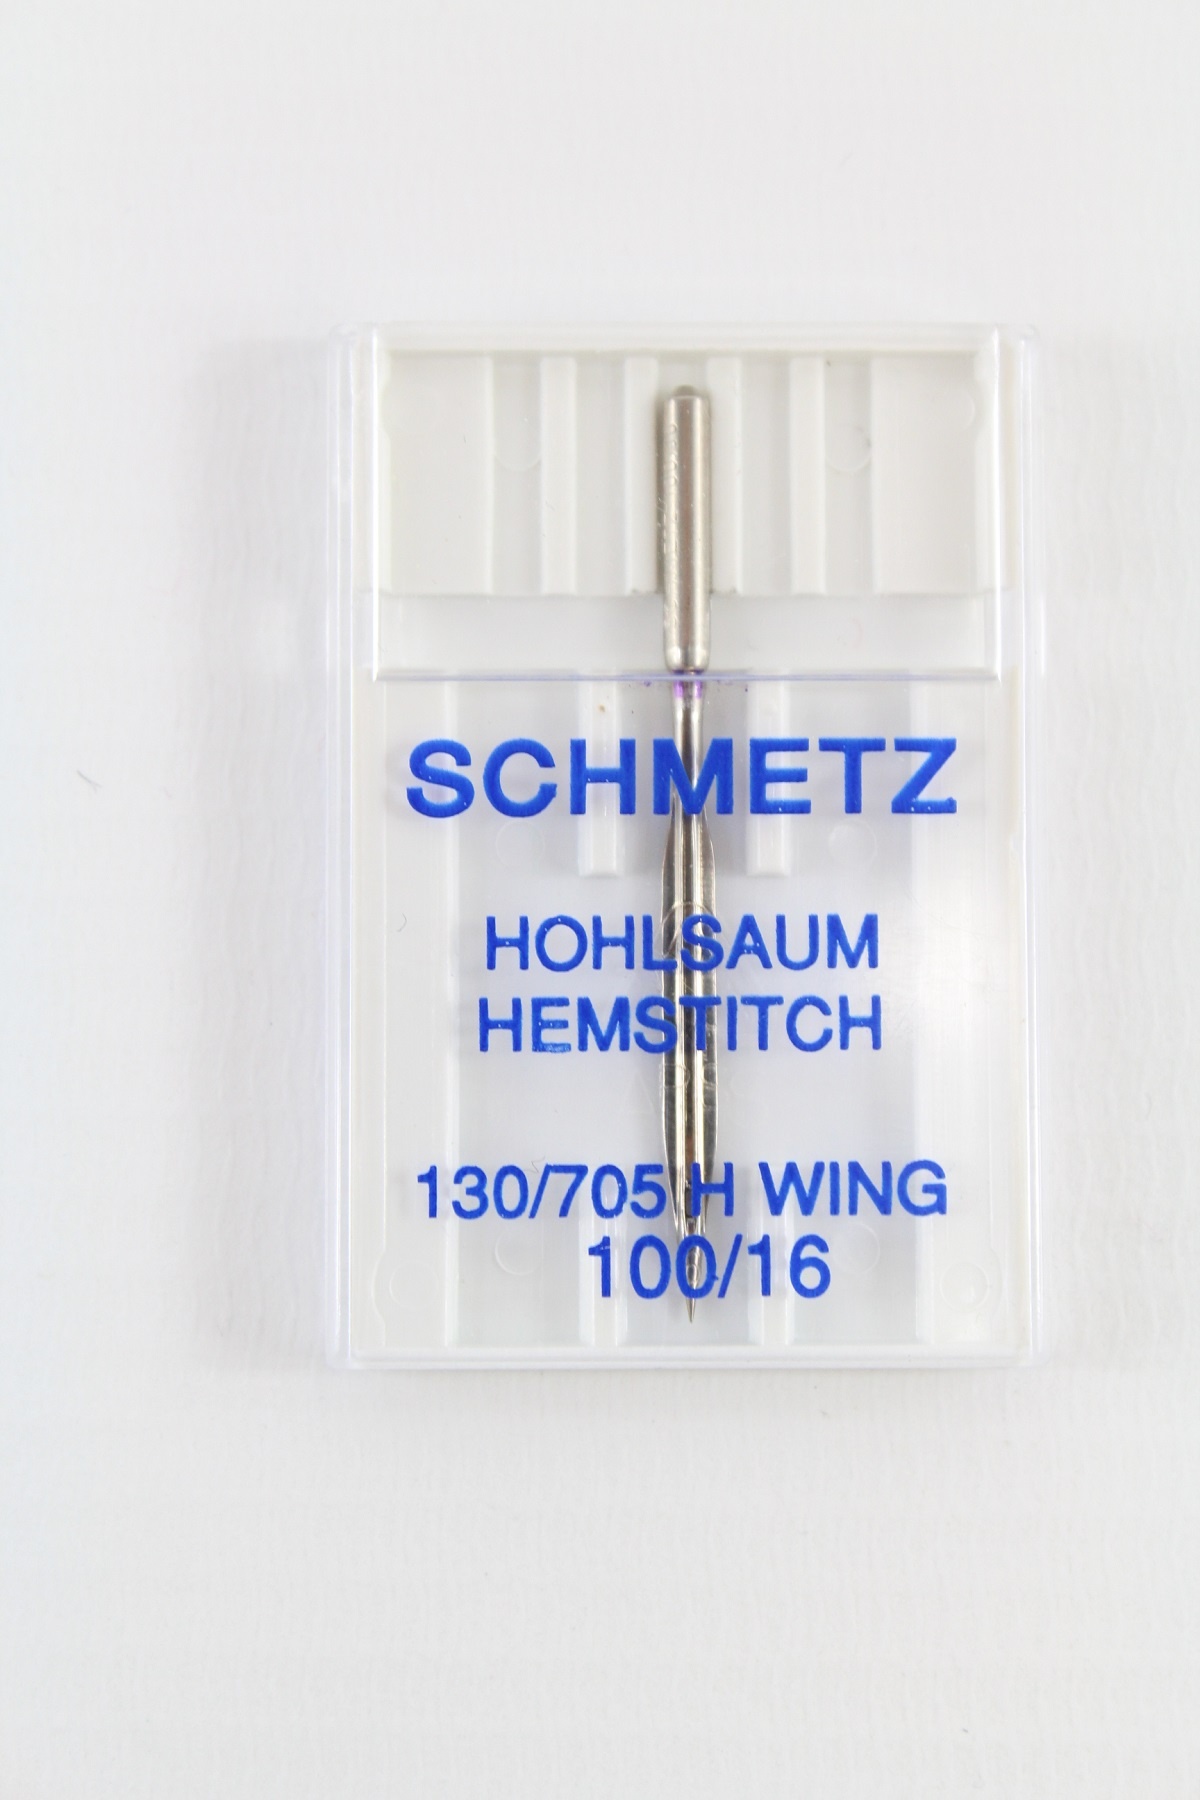 Schmetz Wing (Hohlsaum) 130/705 H WING 100/16